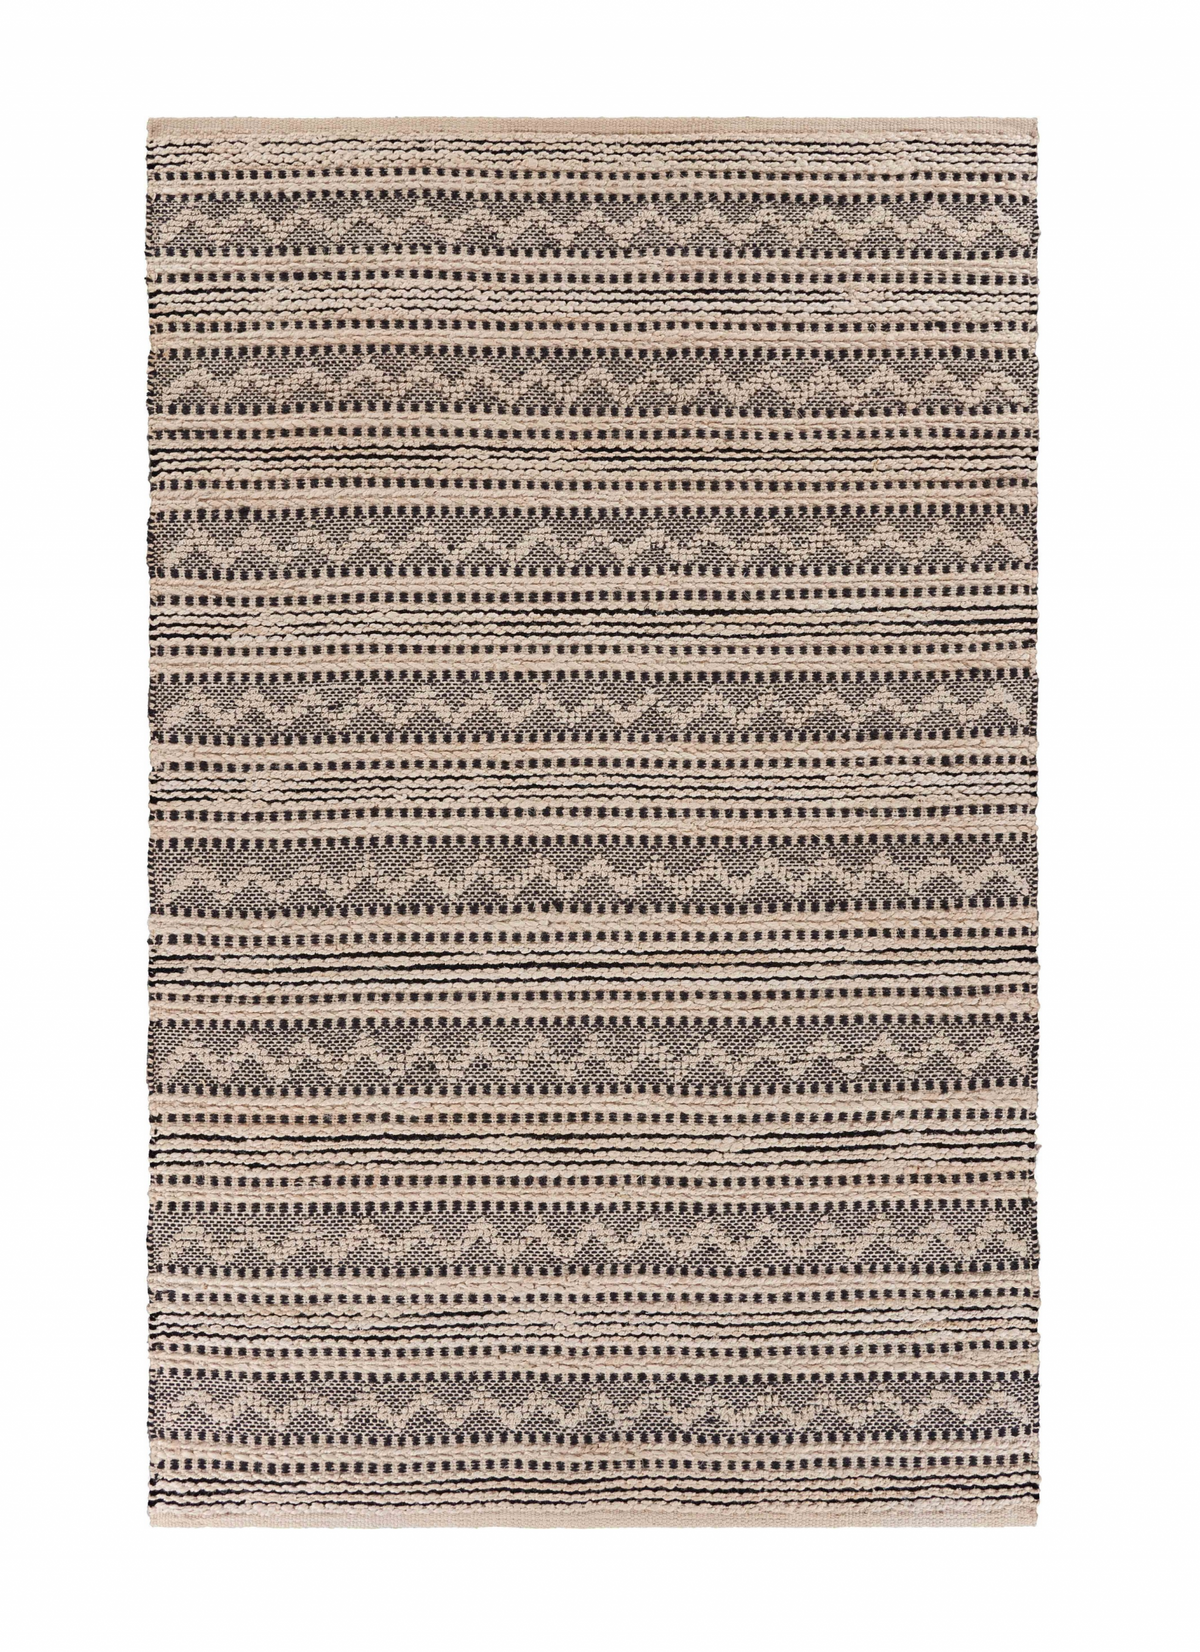 8’ x 10’ Black and Blush Chevron Stripe Area Rug